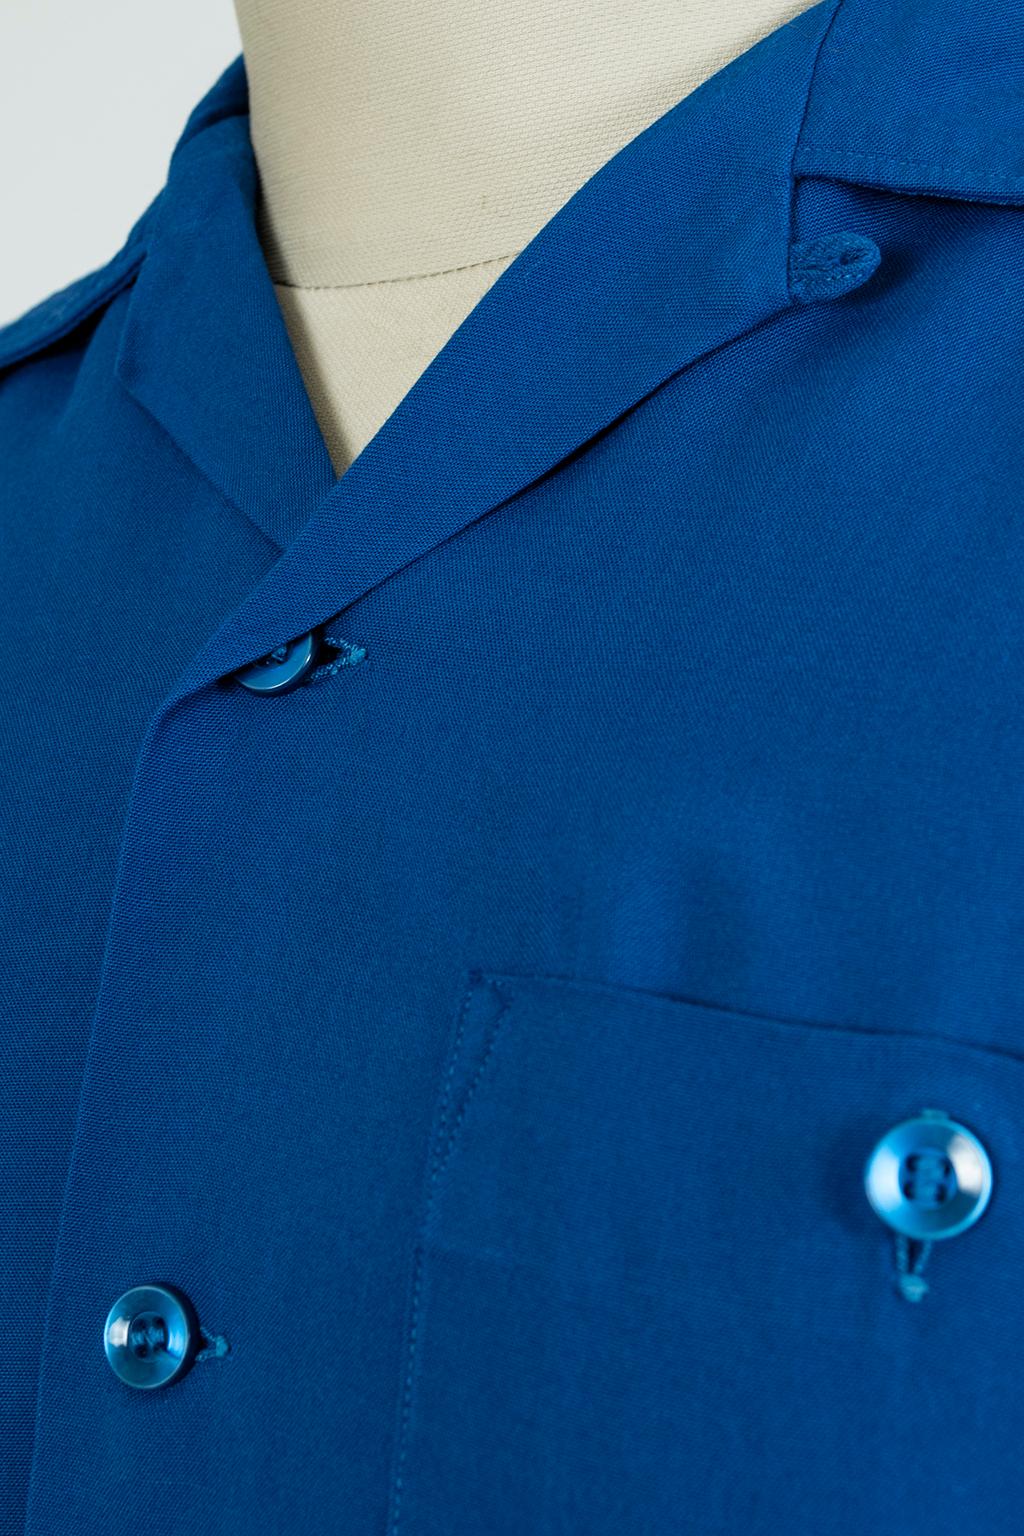 Men's Men’s King Louie Ten Strike Royal Blue Bowling Shirt – Medium, 1950s For Sale